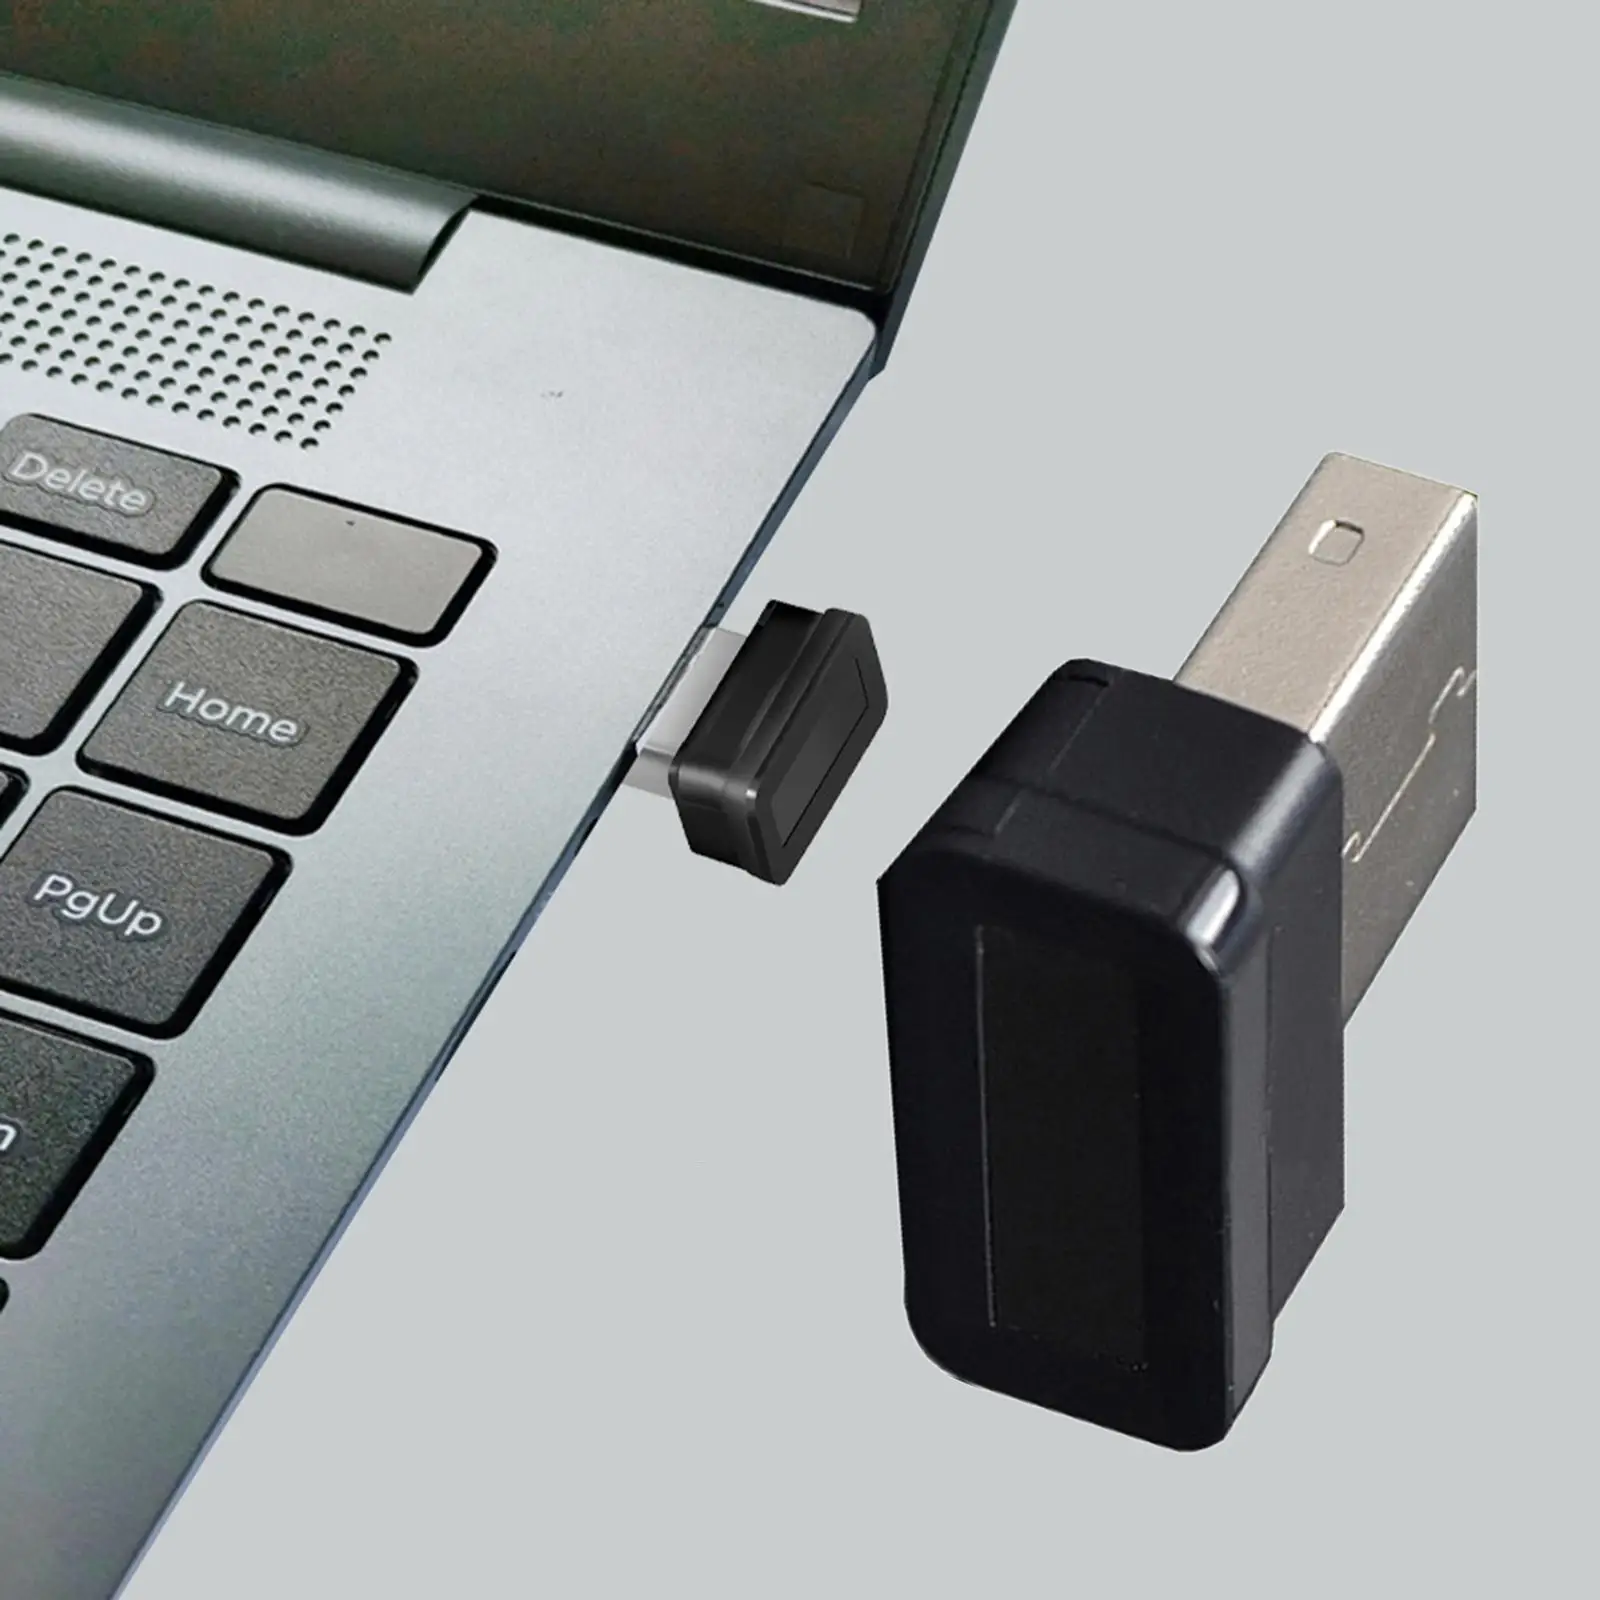 Mini USB Fingerprint Reader 360 Touch Speedy Matching 0.2S Speedy Matching Fingerprint Sensor for Windows 10 Hello